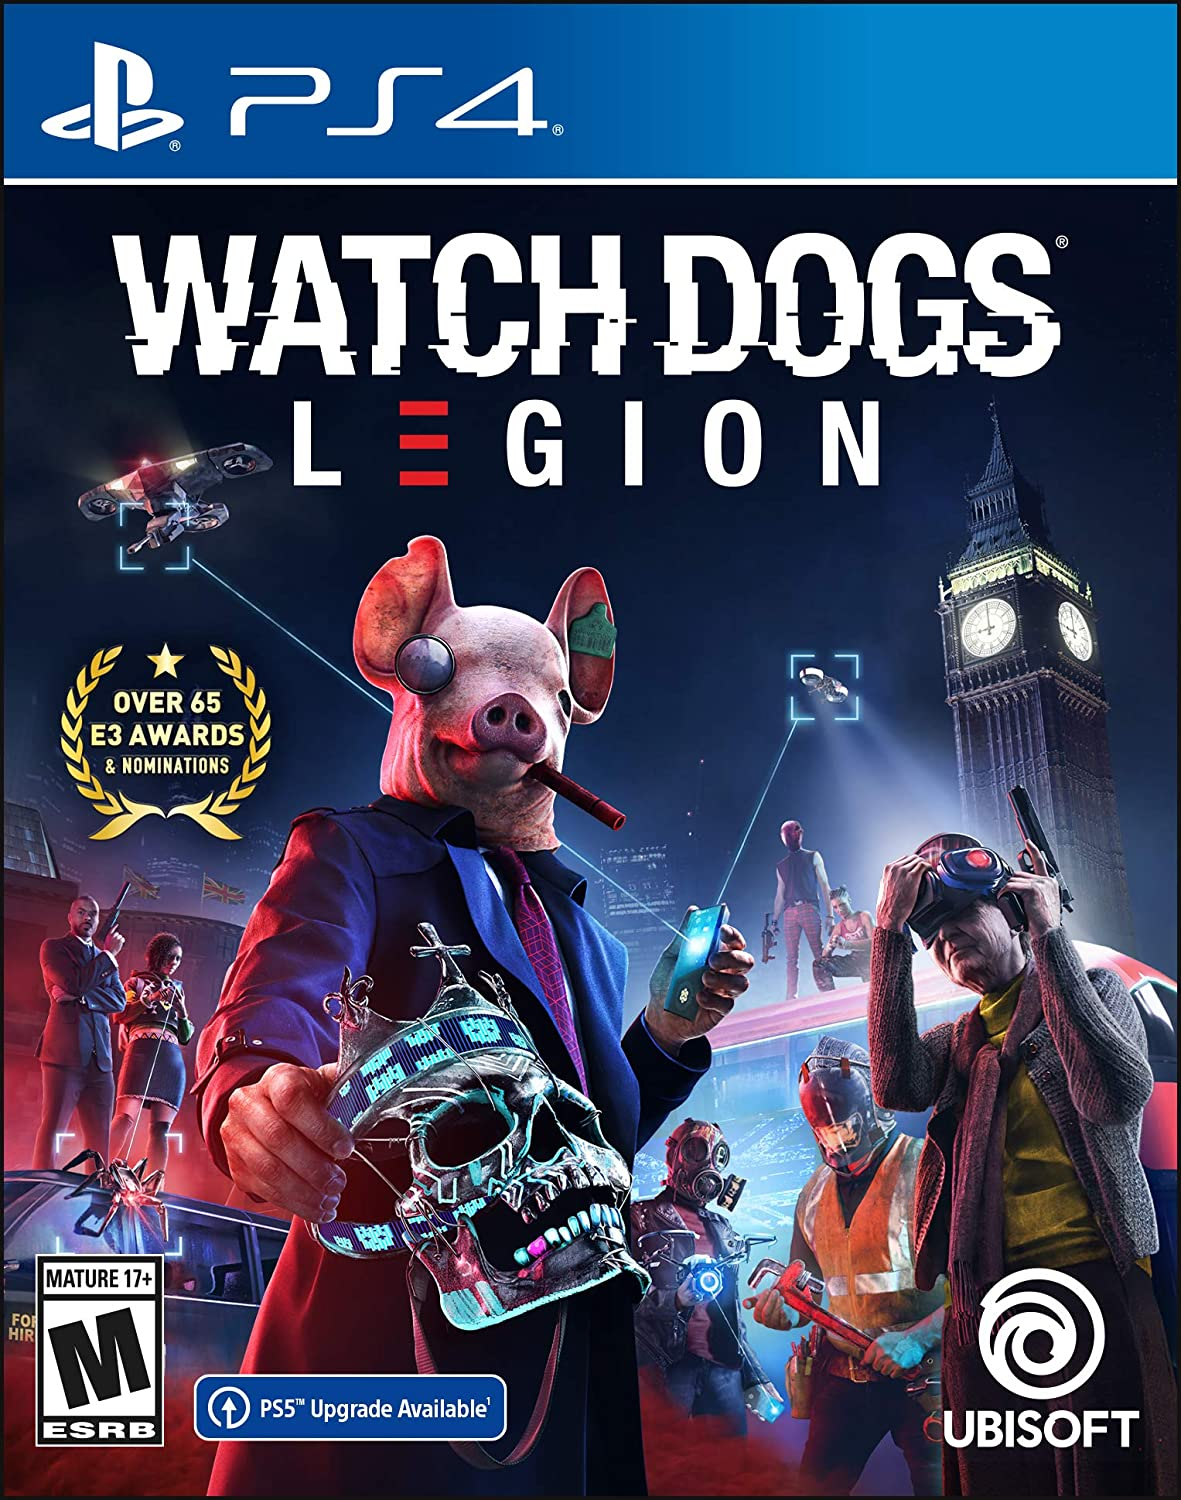 Amazon.com: Watch Dogs Legion - PlayStation 4 Standard Edition: Ubisoft: Video Games $29.99